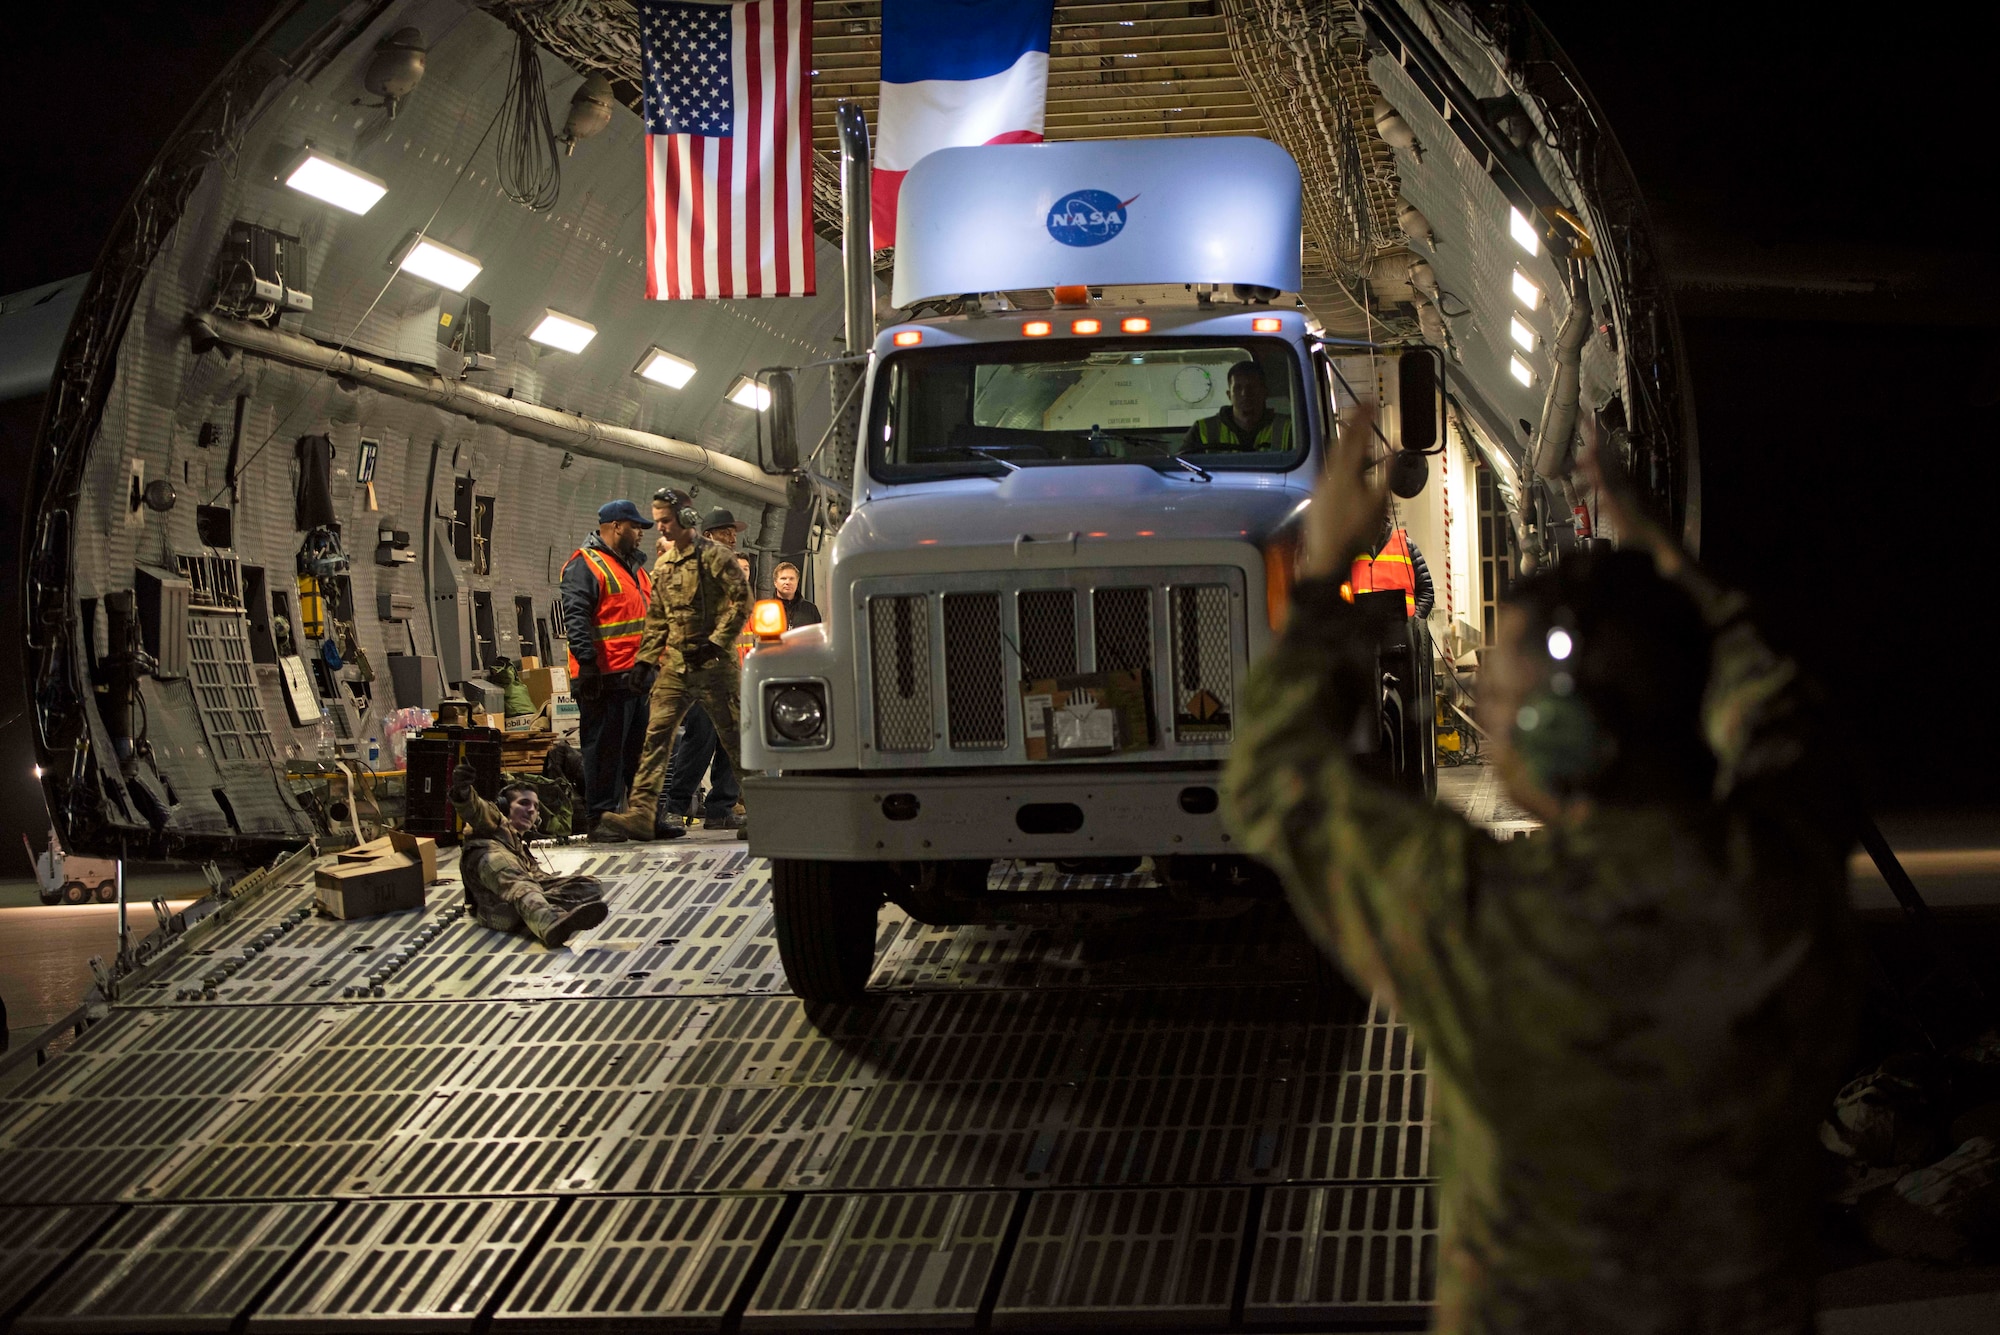 An airman guides a truck out of an aircraft.